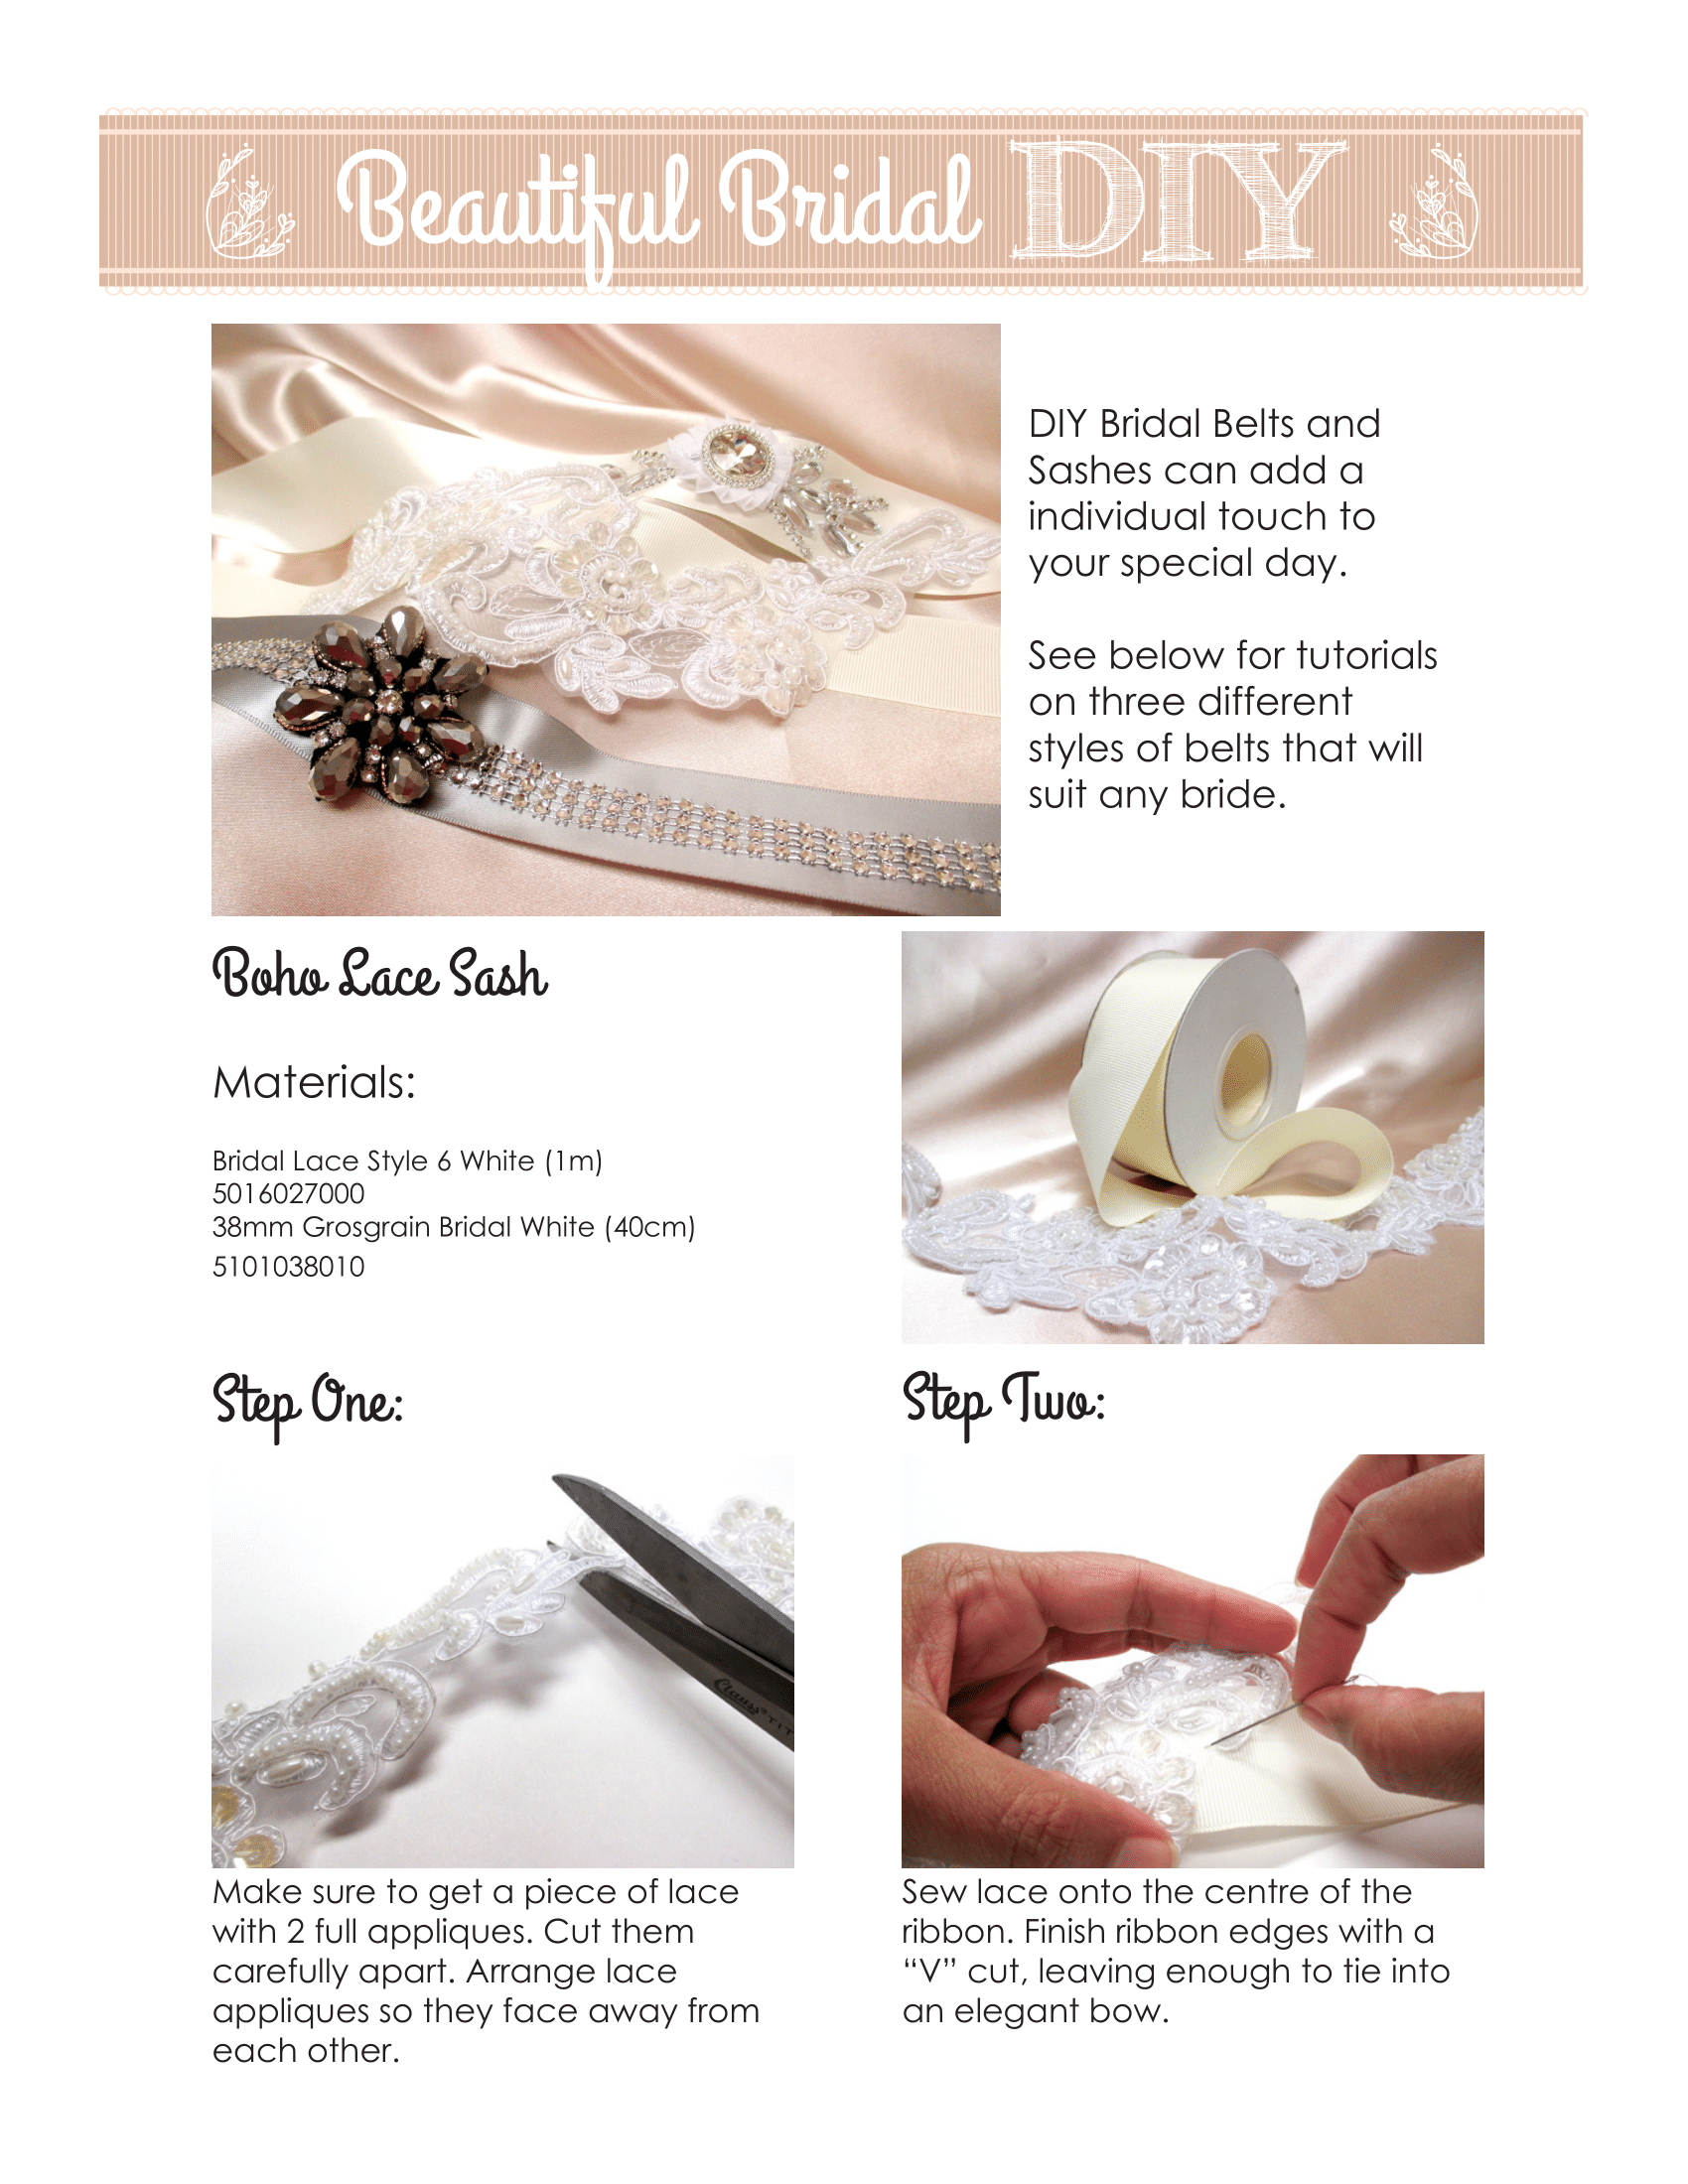 Materials & steps to create boho lace sash